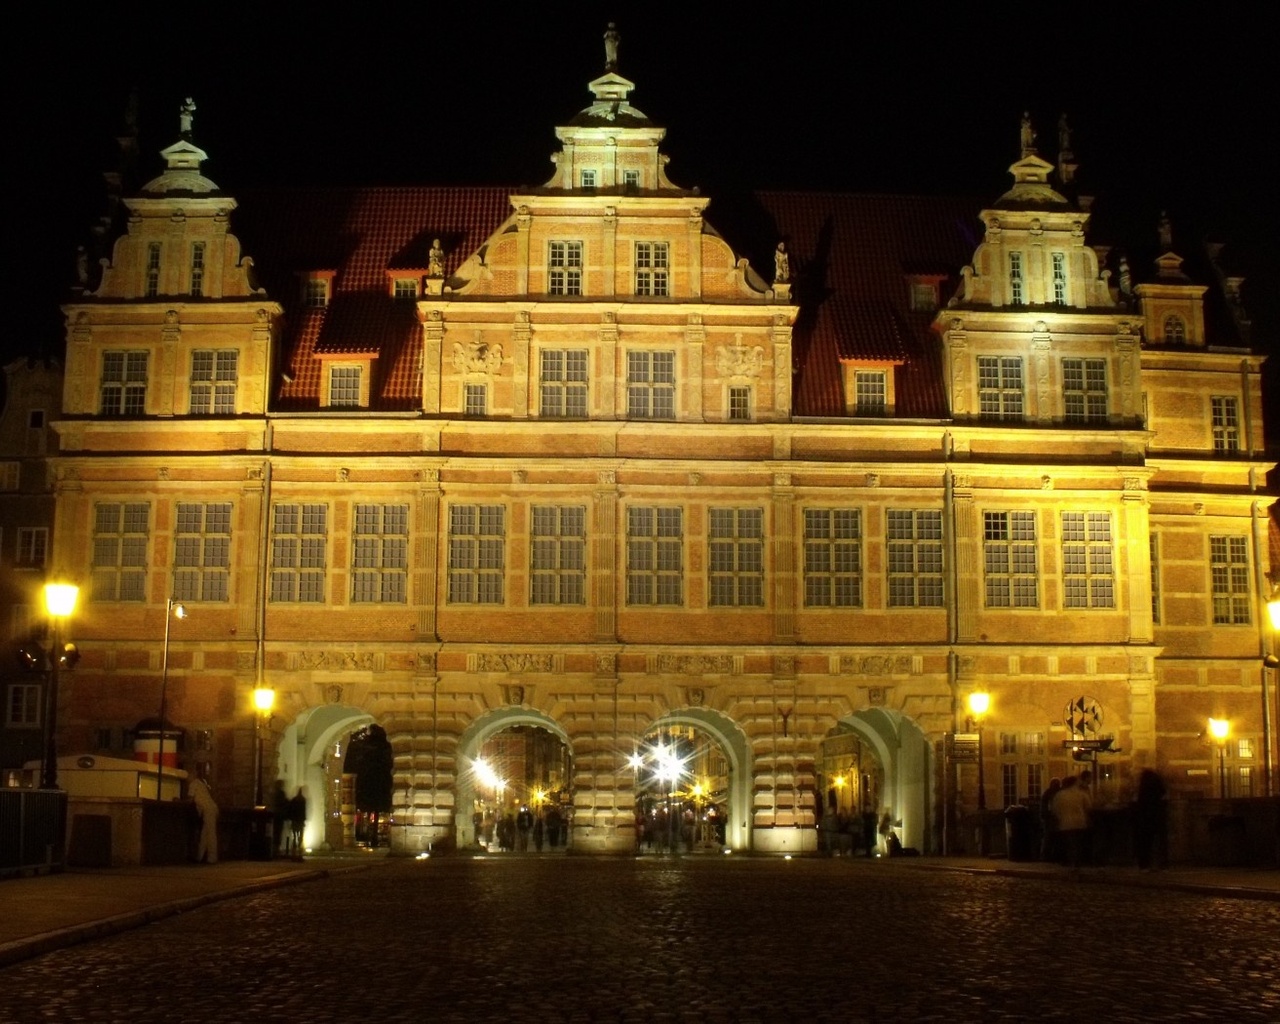 night, city of night, gold gate, gdansk